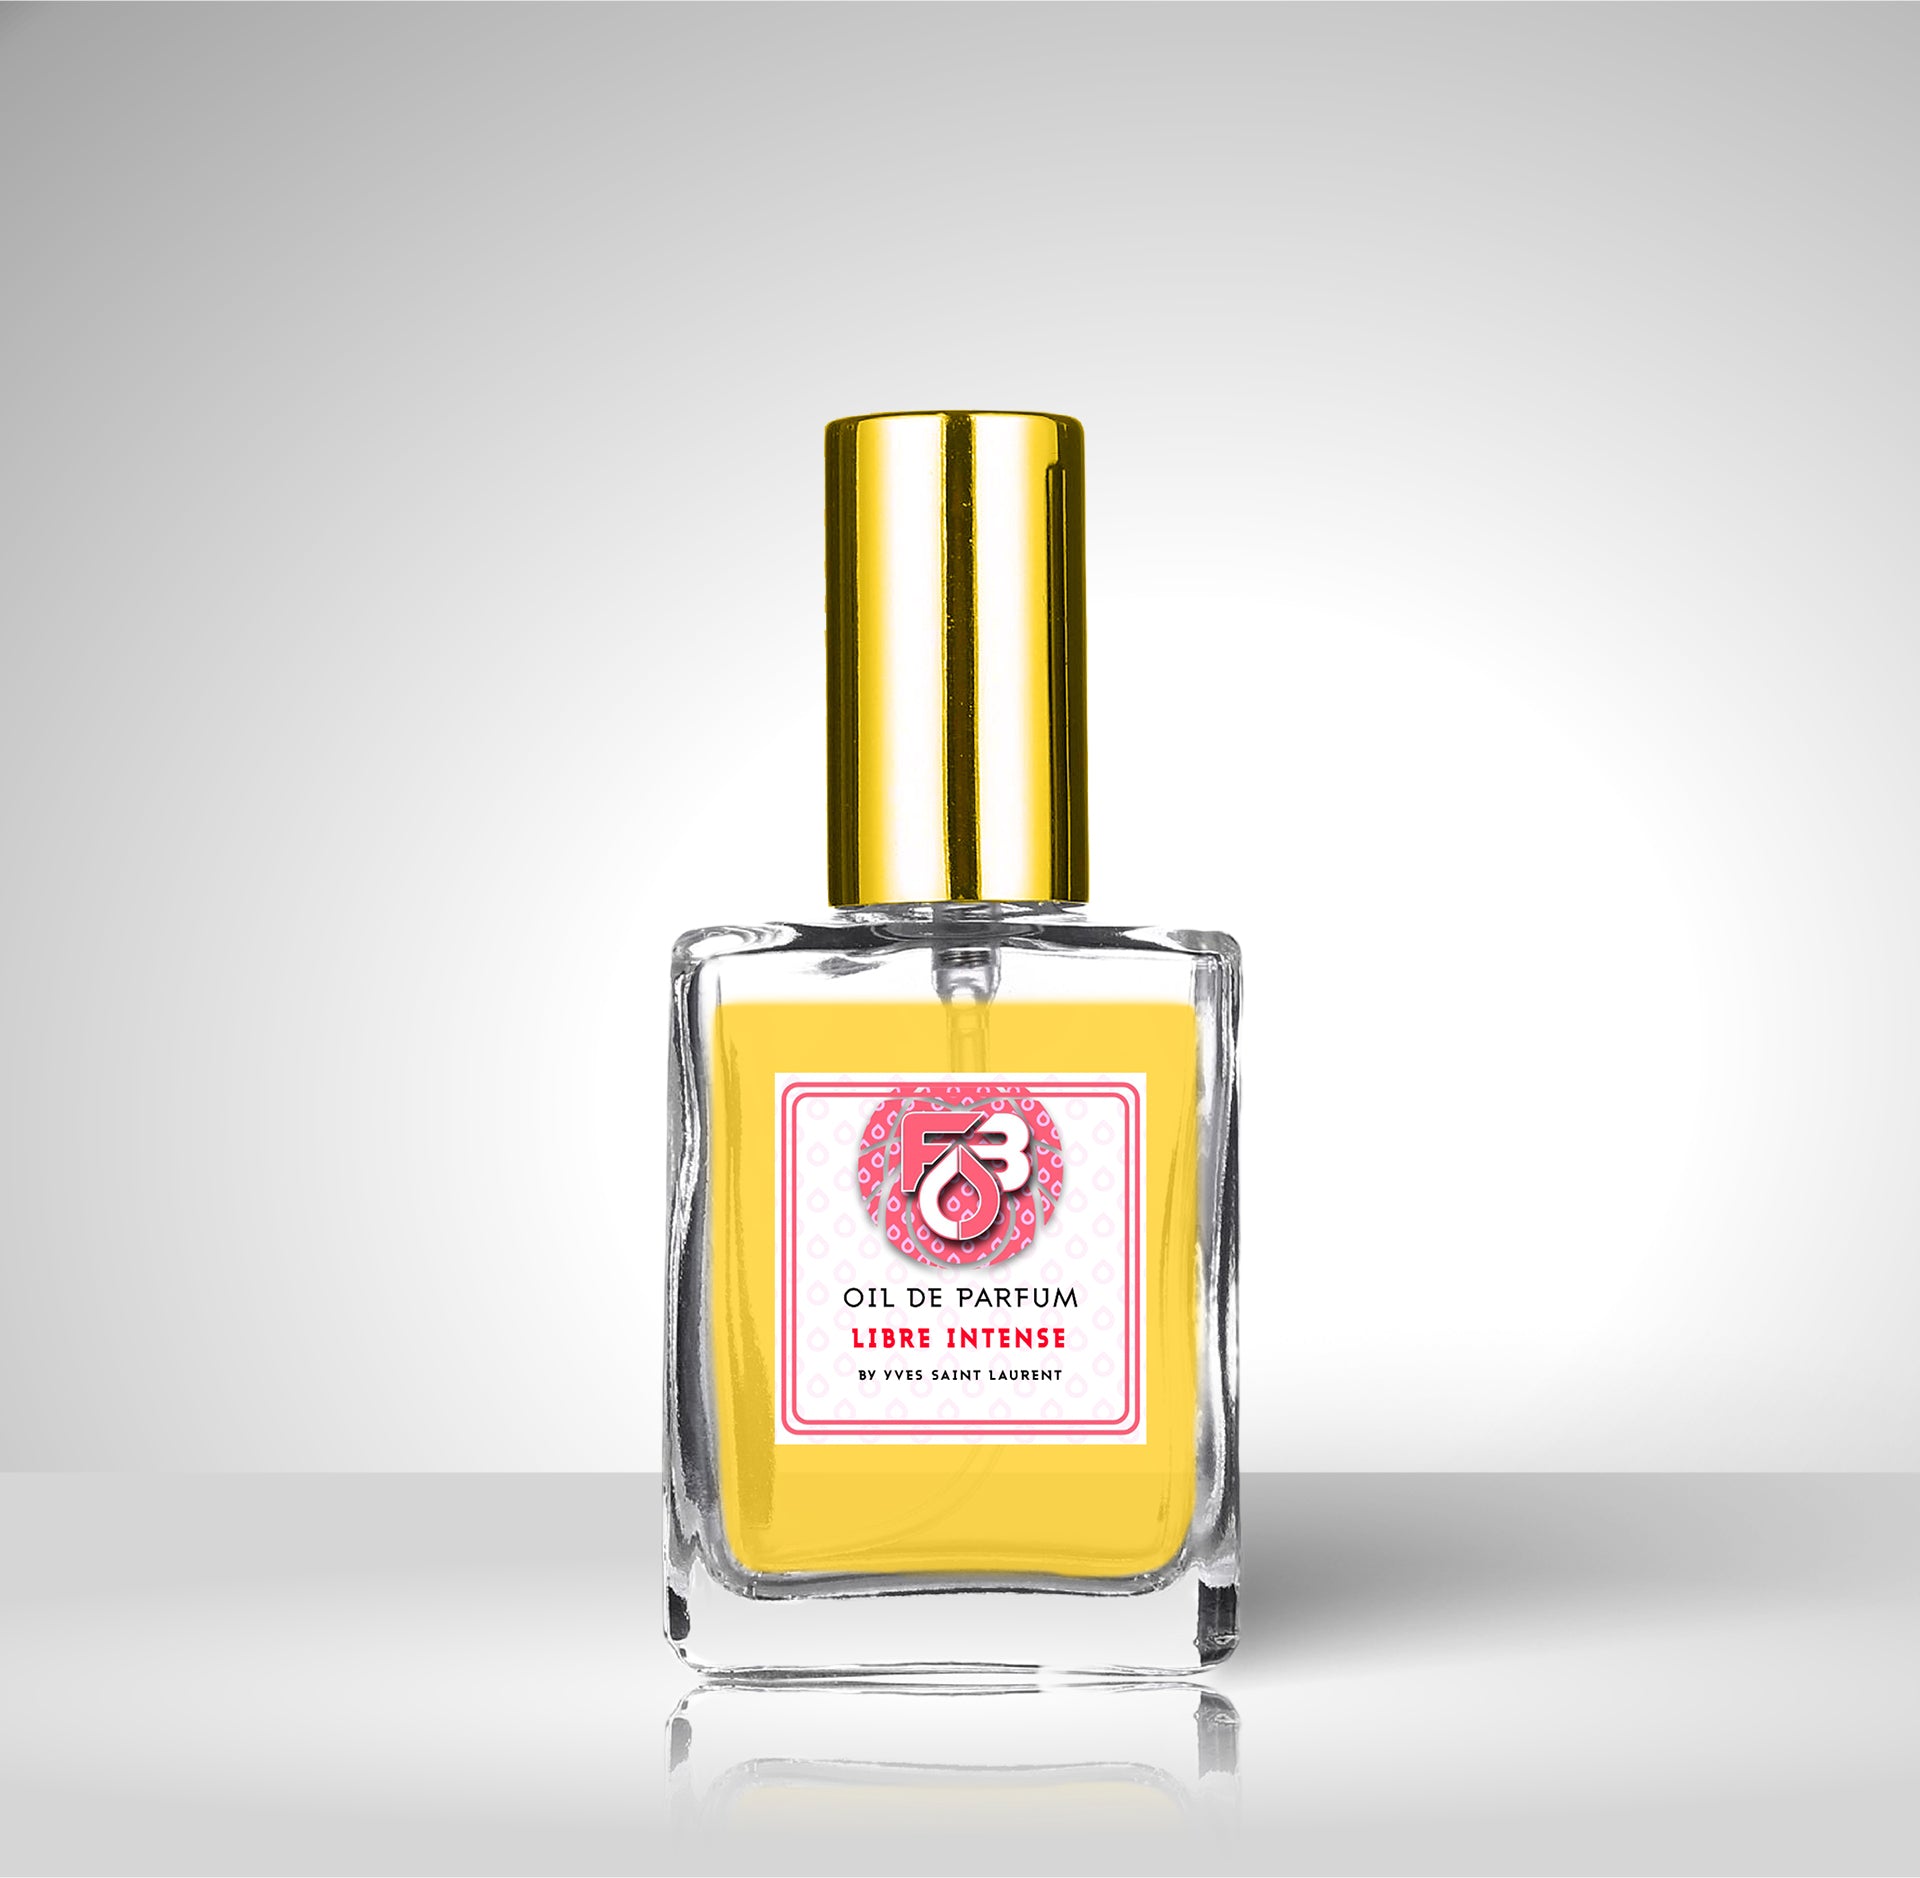 YSL - Libre Intense - Oil Perfumery